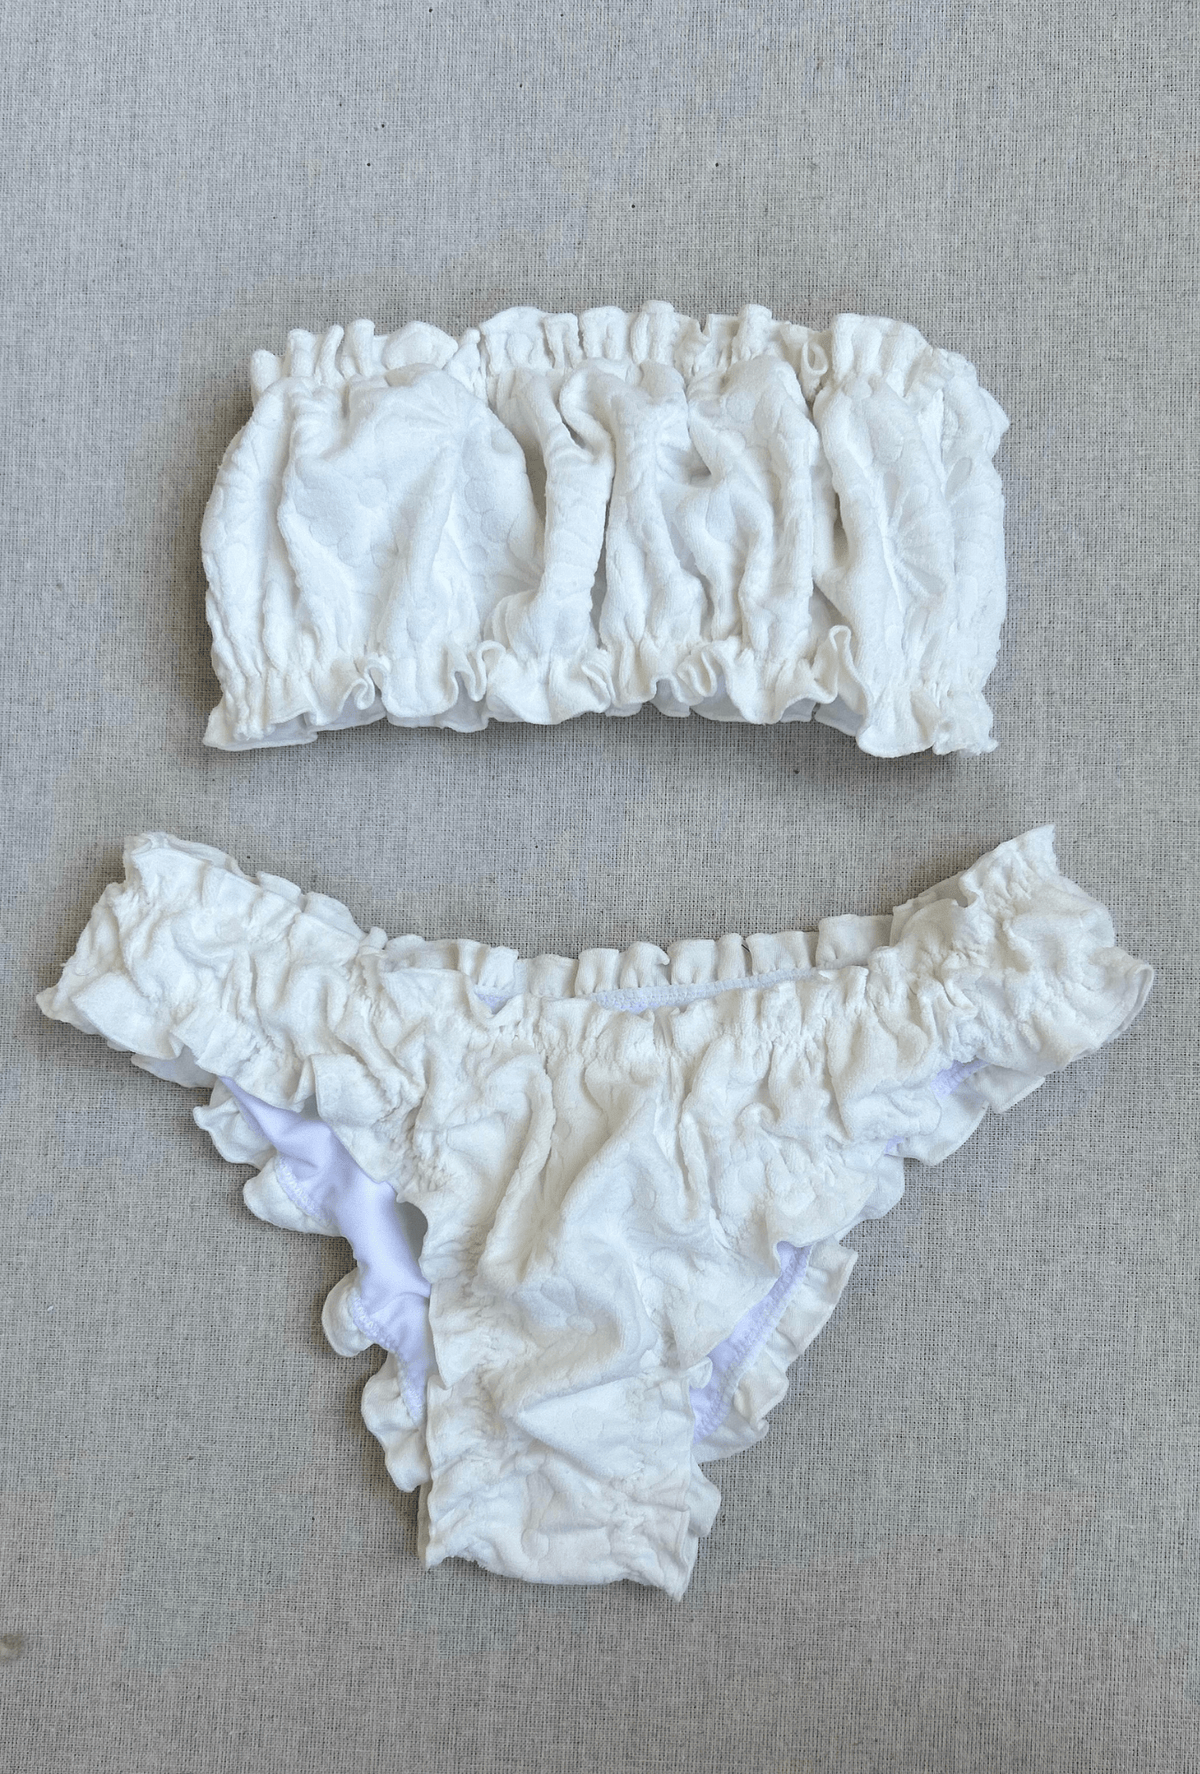 lee top / chloe bottom in white daisy - size xs